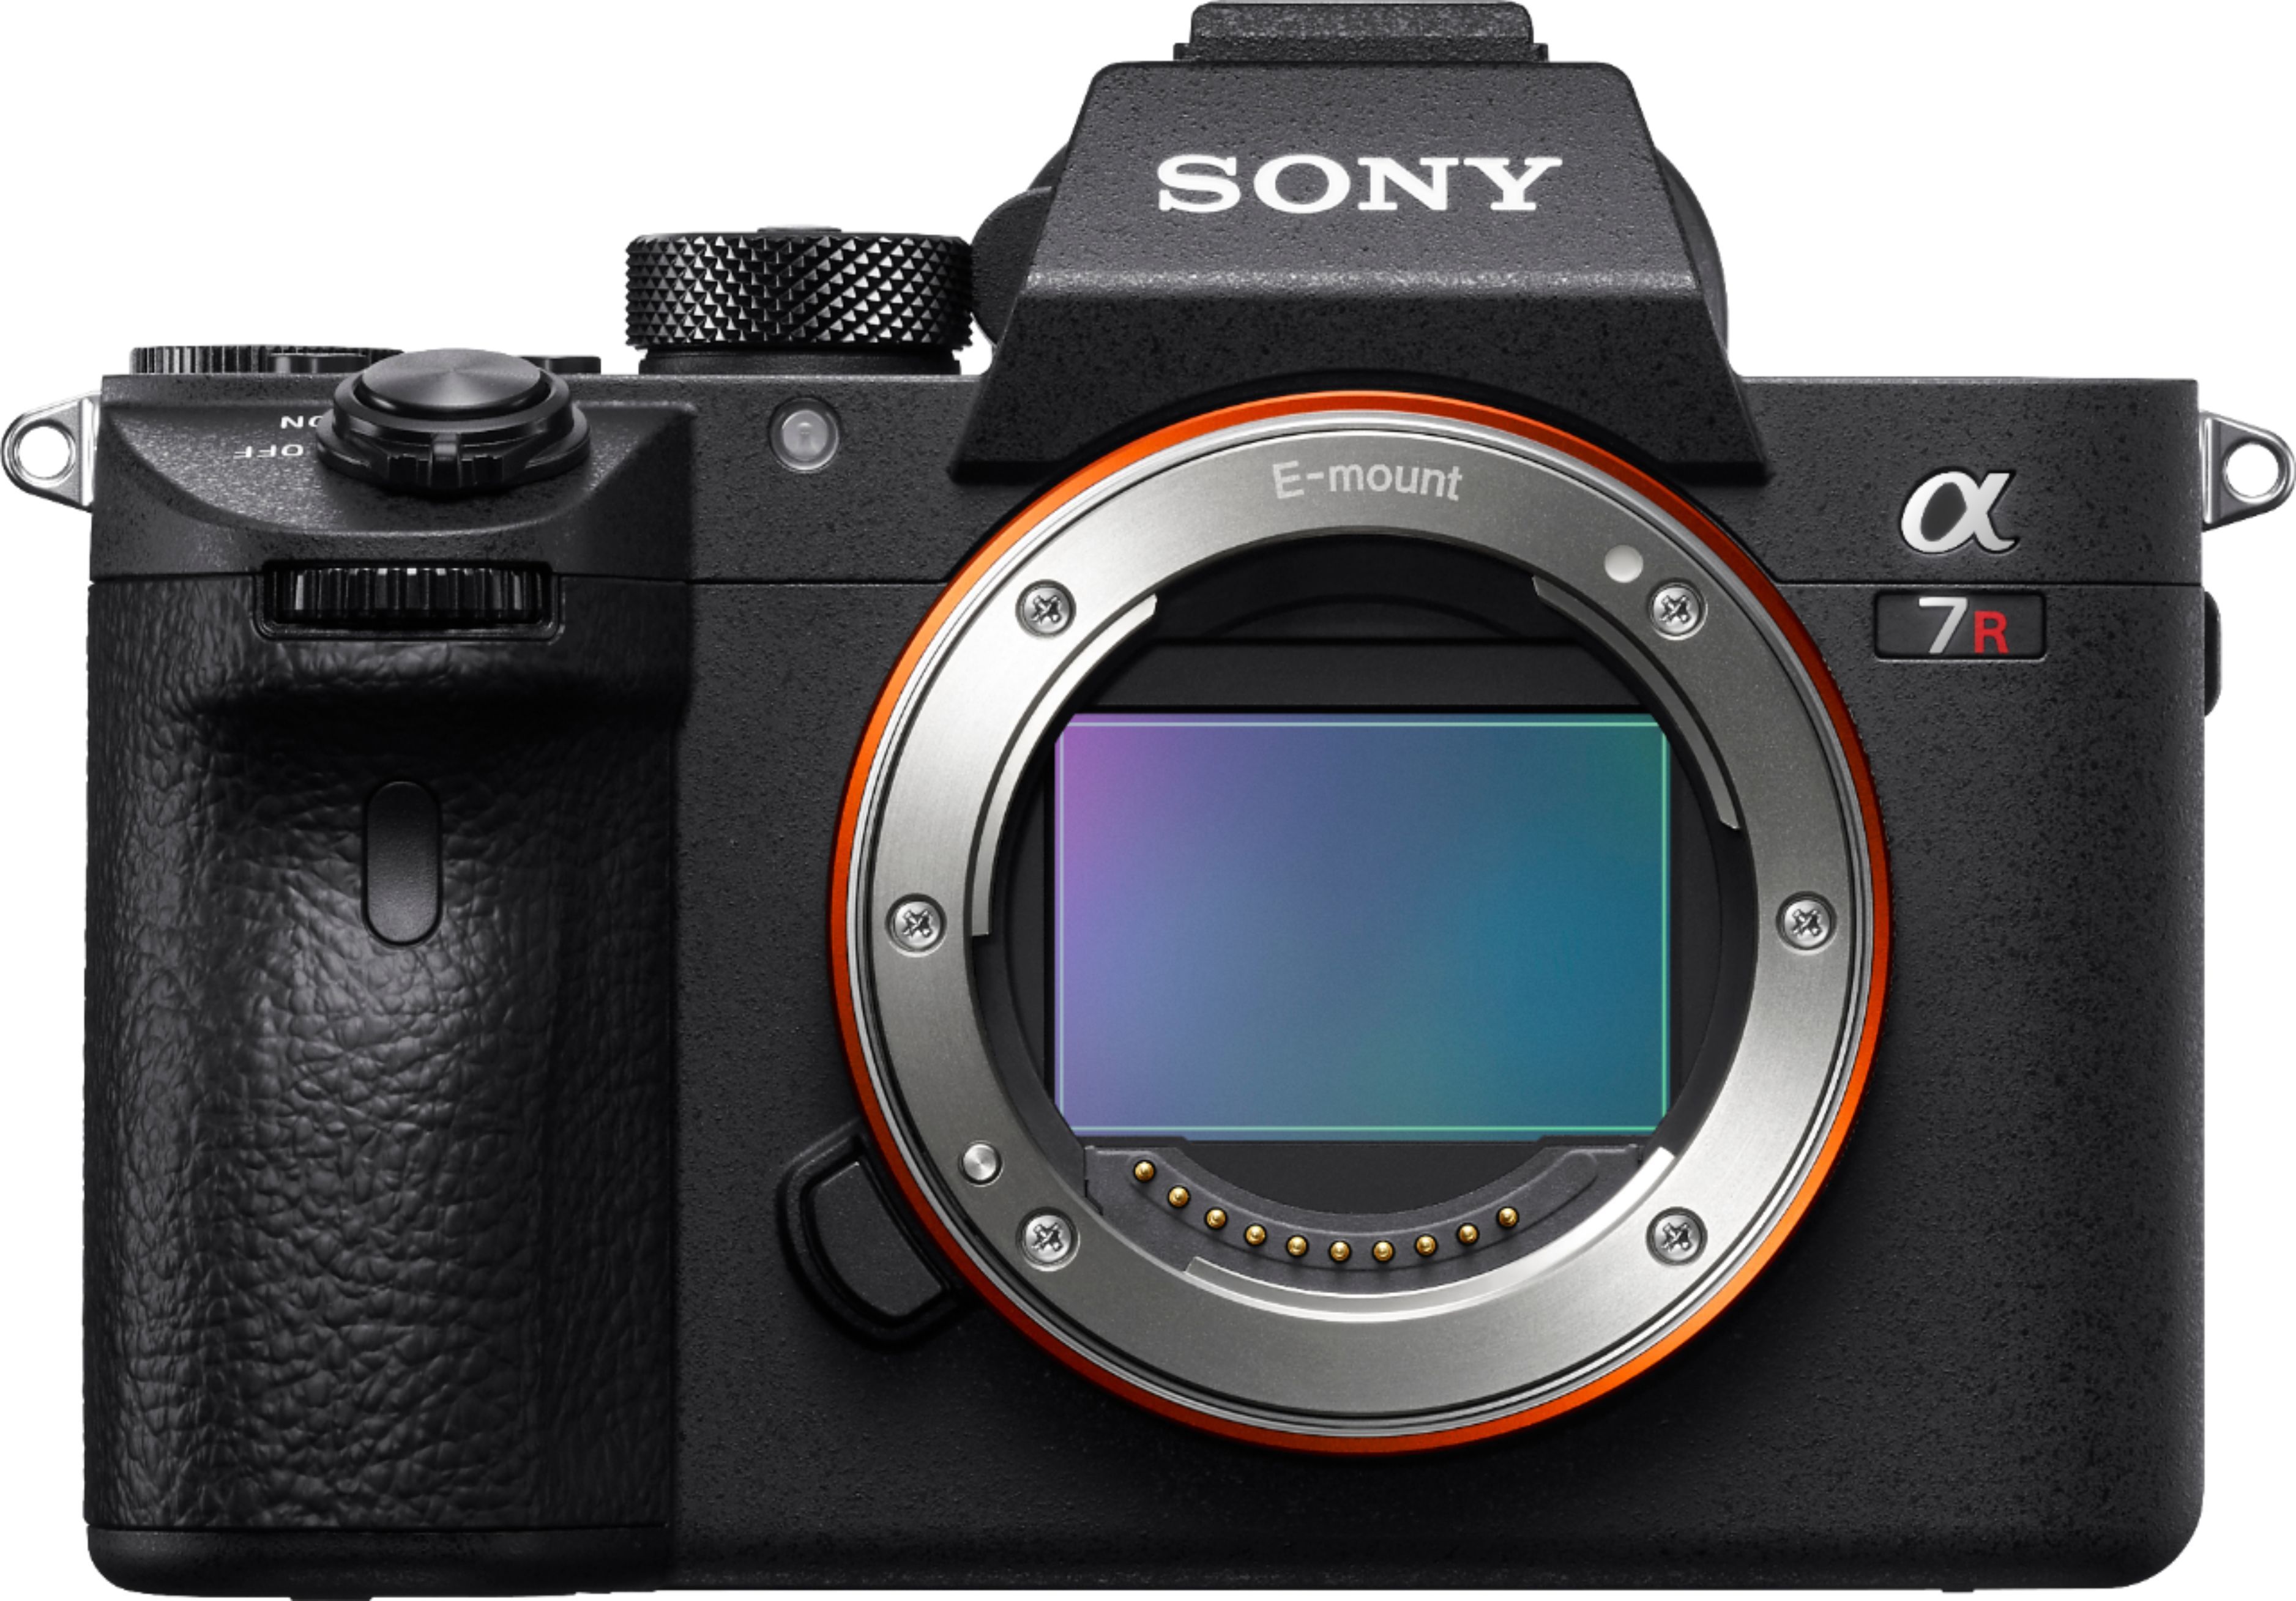 Sony Alpha a7R III Full-Frame Mirrorless 4k Video Camera (Body Only) Black ILCE7RM3/B - Best Buy | Best Buy U.S.